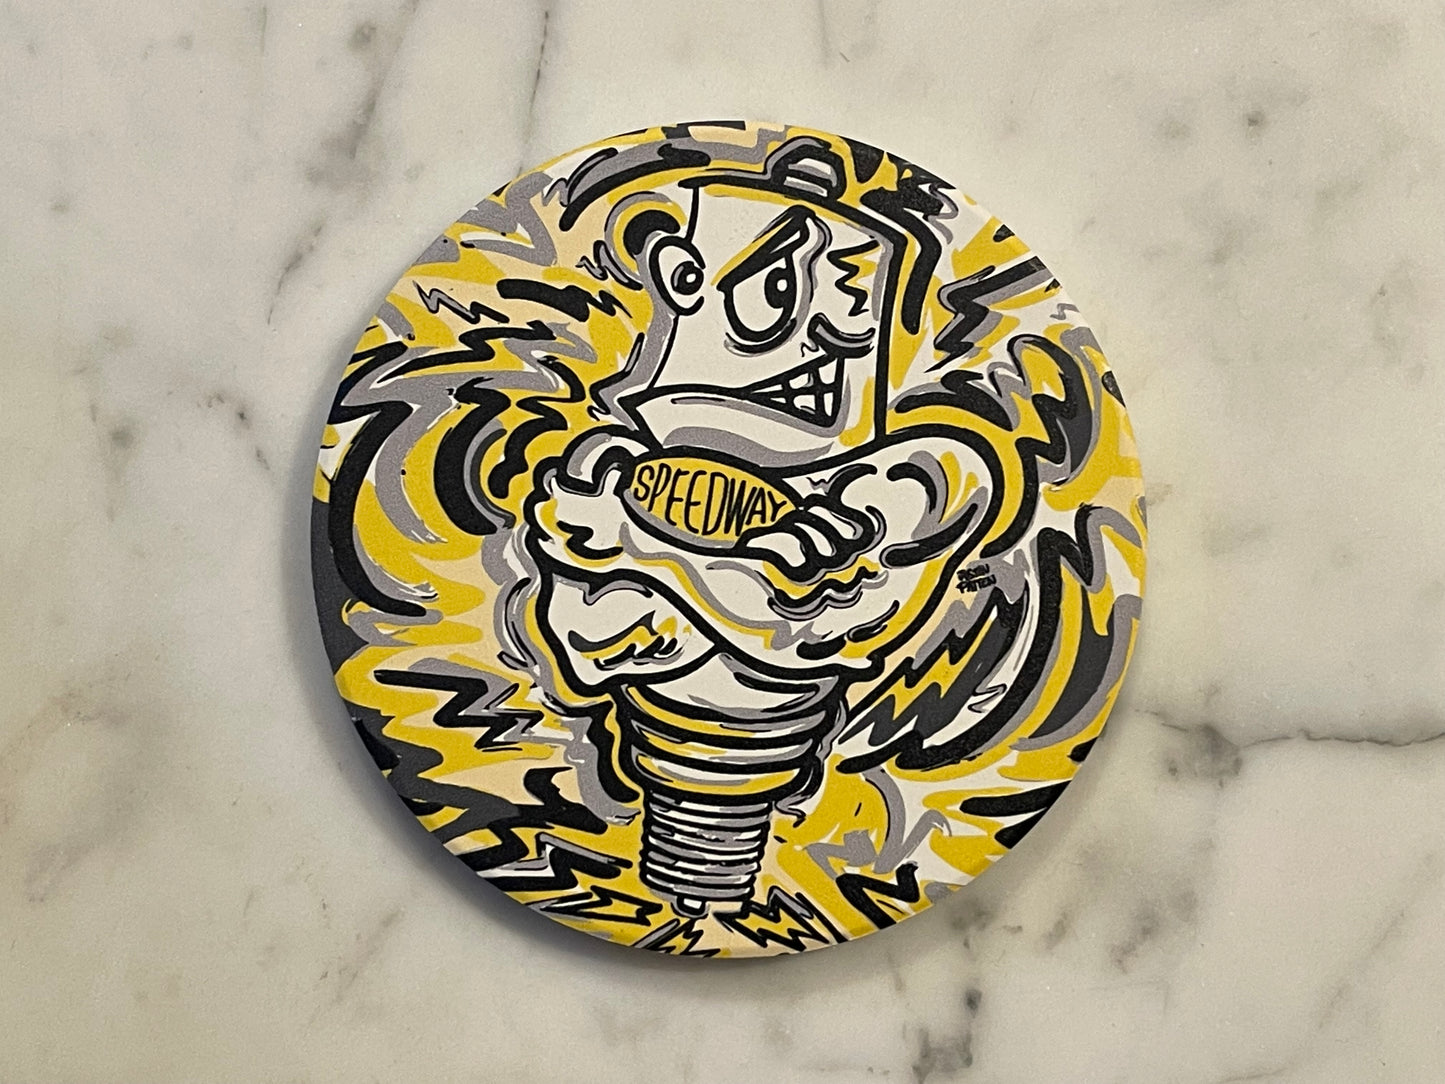 Speedway Sparkplug Mascot Stone Coaster by Justin Patten